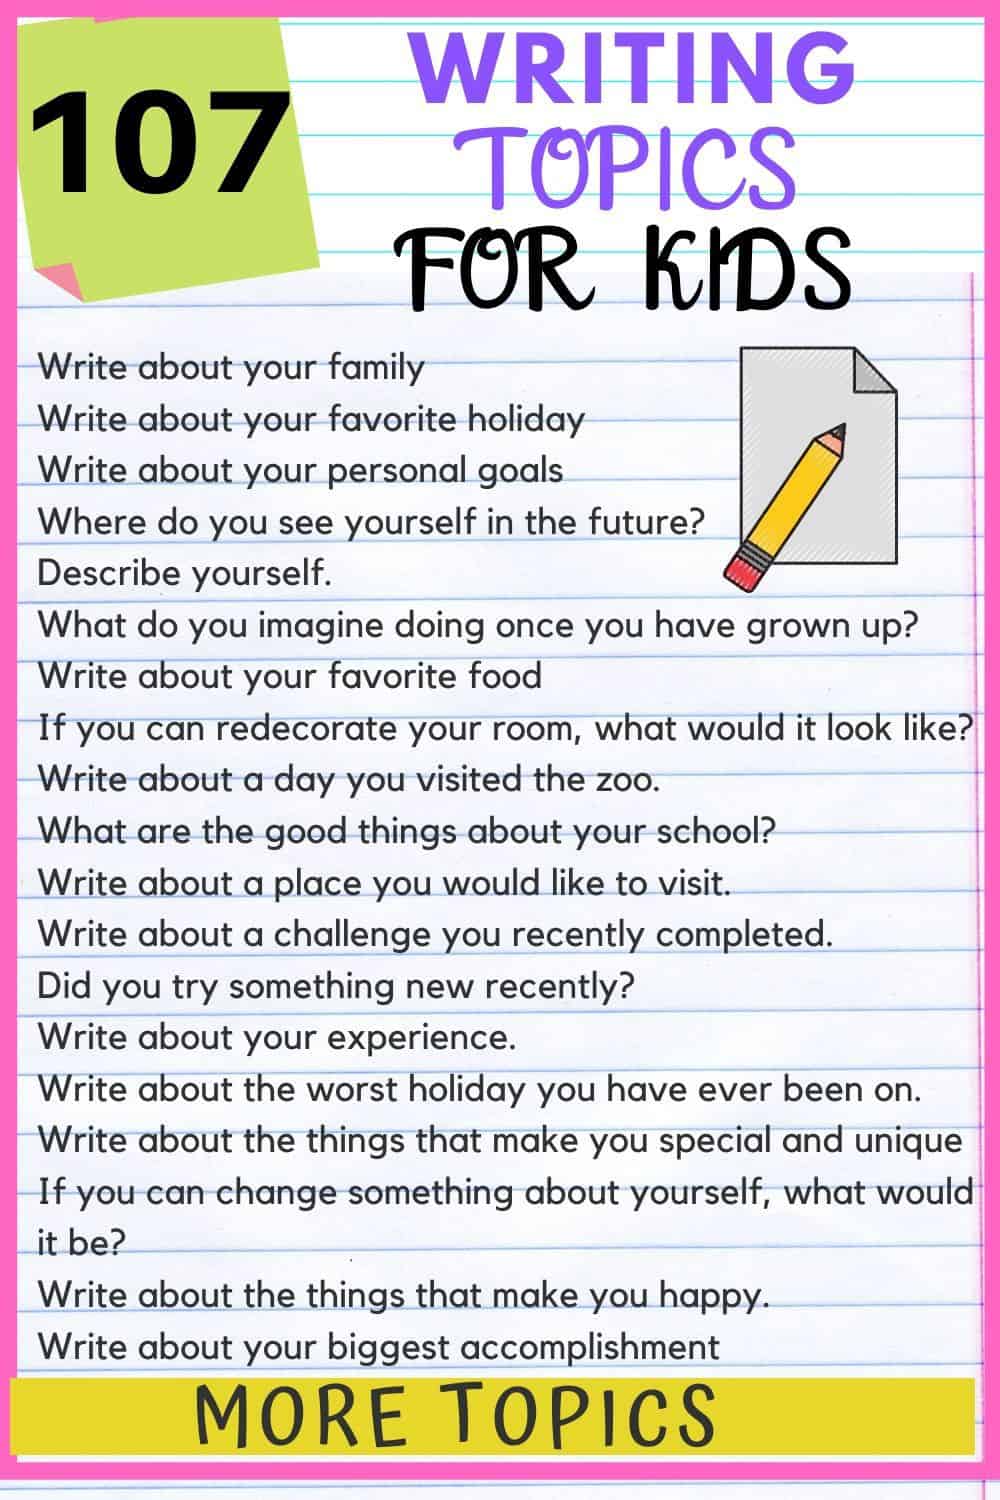 writing topics for kindergarten students